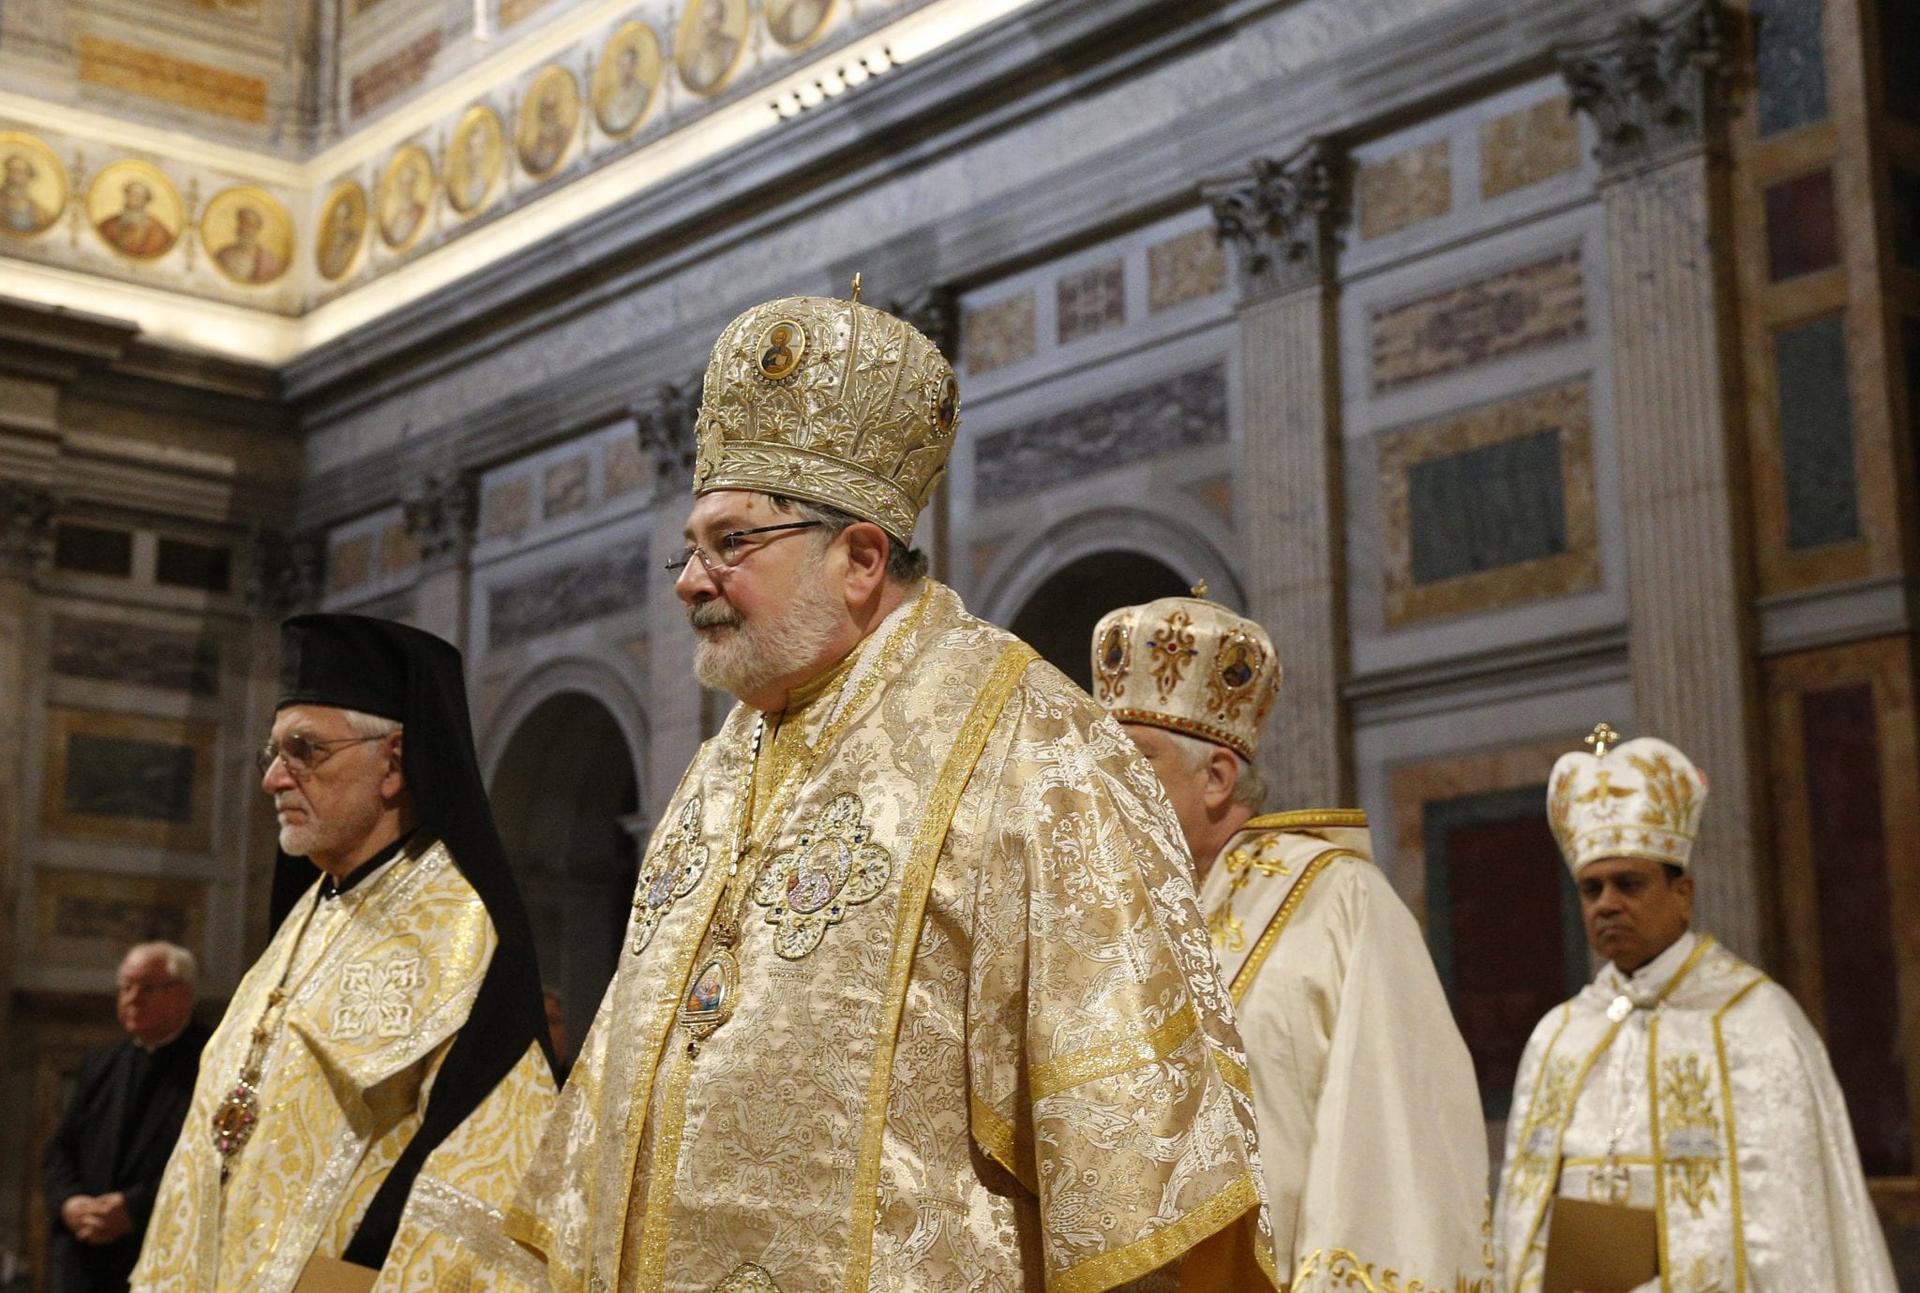 Eastern churches help Catholic Church be truly catholic, bishop says